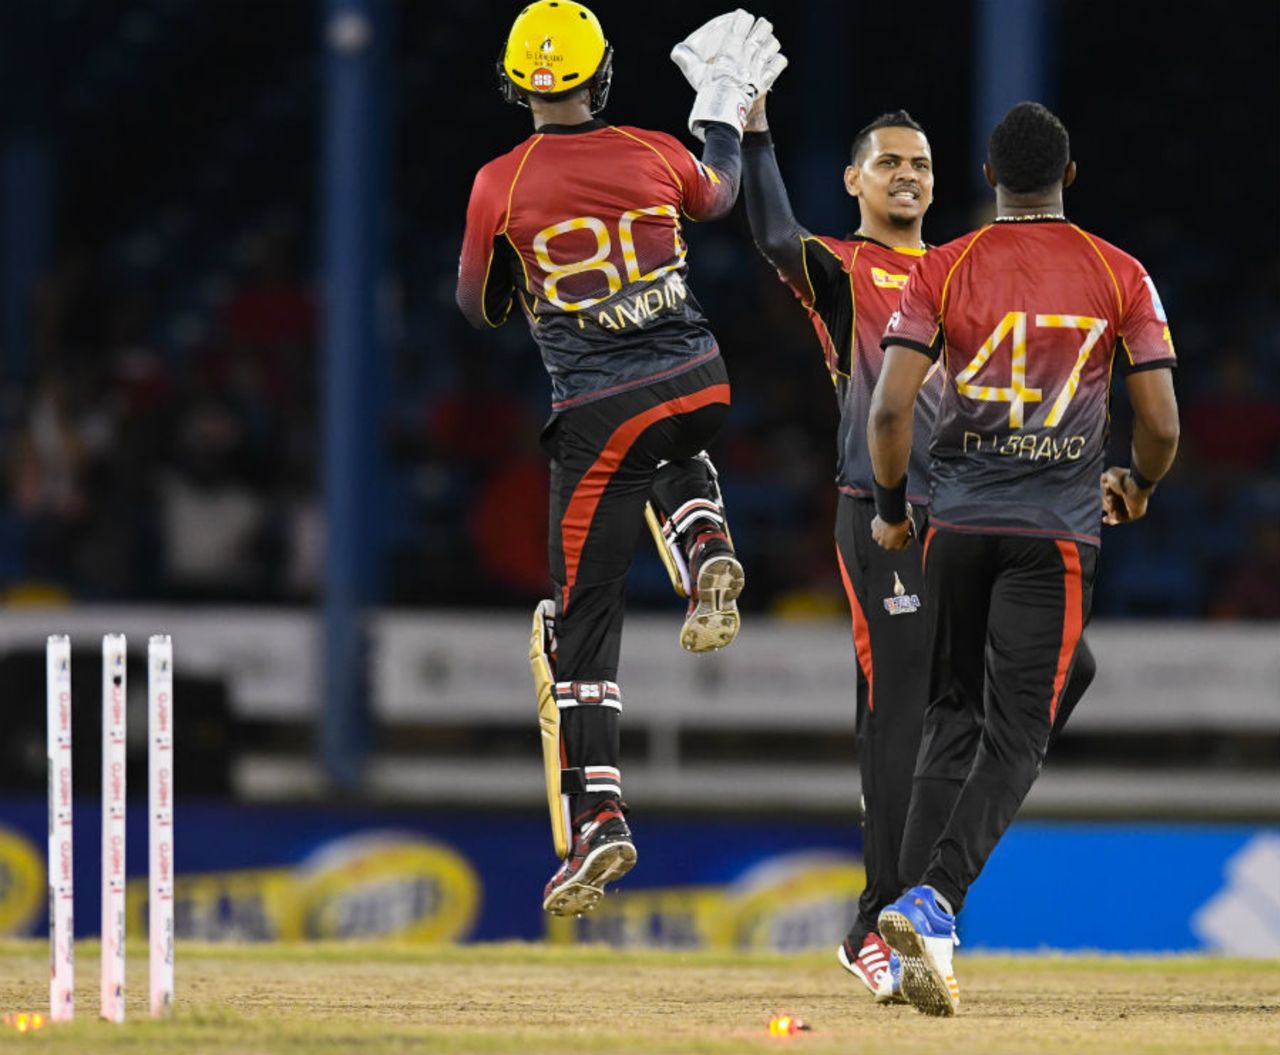 Sunil Narine celebrates the wicket of Marlon Samuels, Trinbago Knight Riders v St Lucia Stars, Port-of-Spain, CPL, August 7, 2017